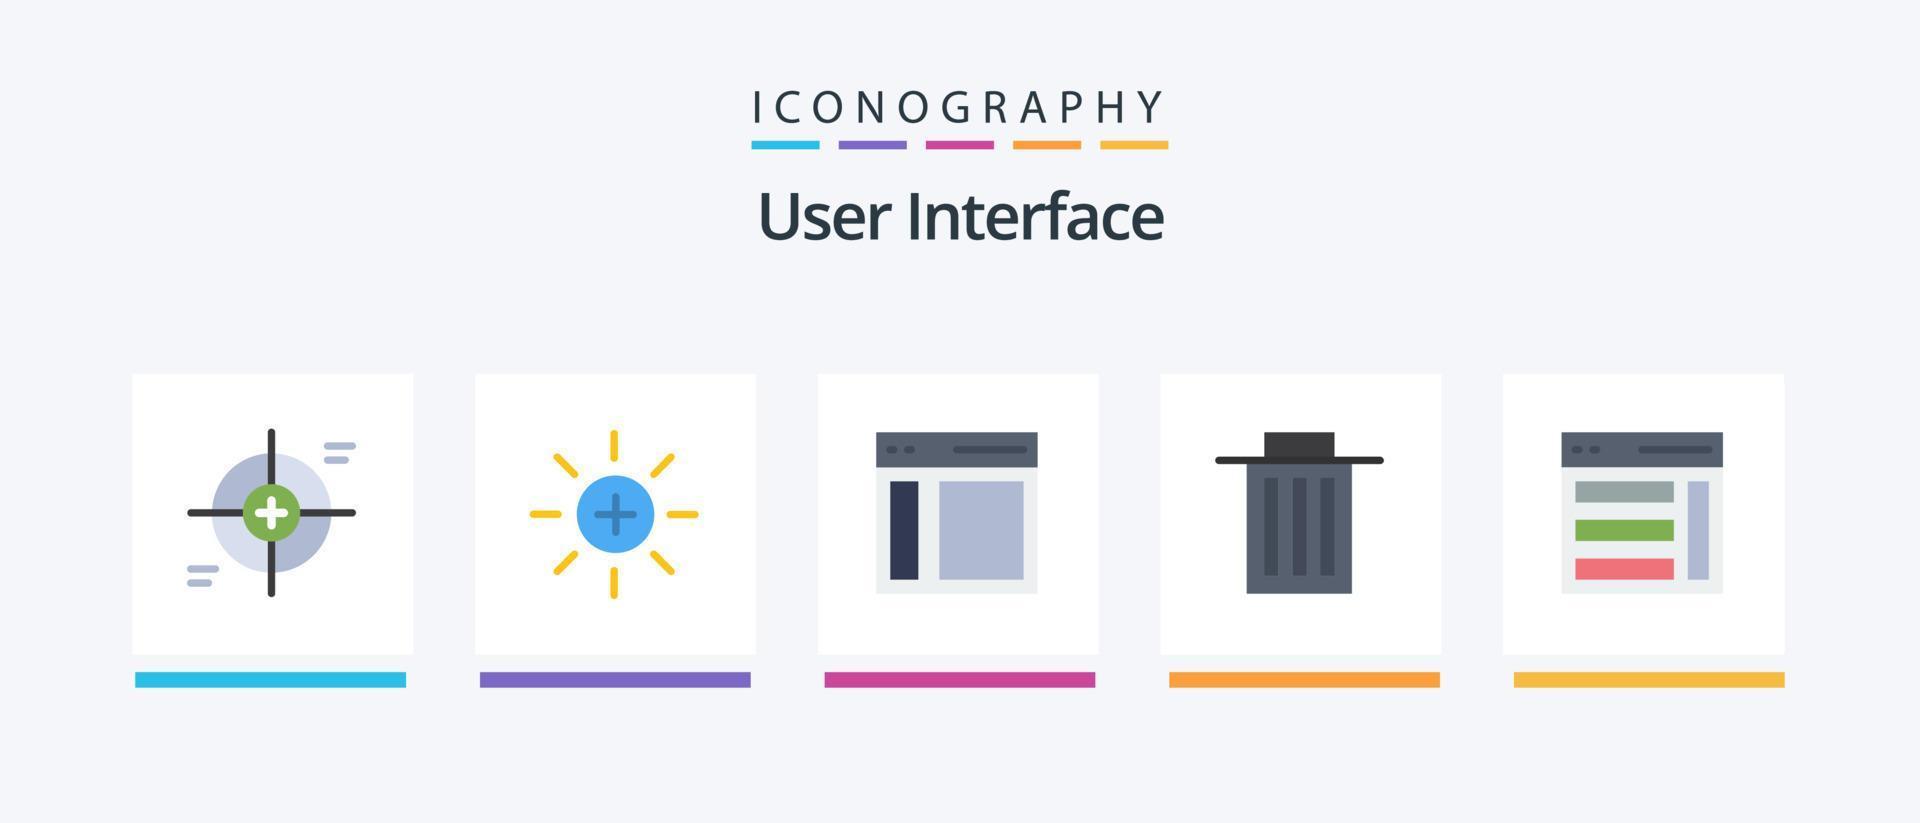 interfaz de usuario plana 5 paquete de iconos que incluye usuario. interfaz. usuario. Eliminar. barra lateral diseño de iconos creativos vector